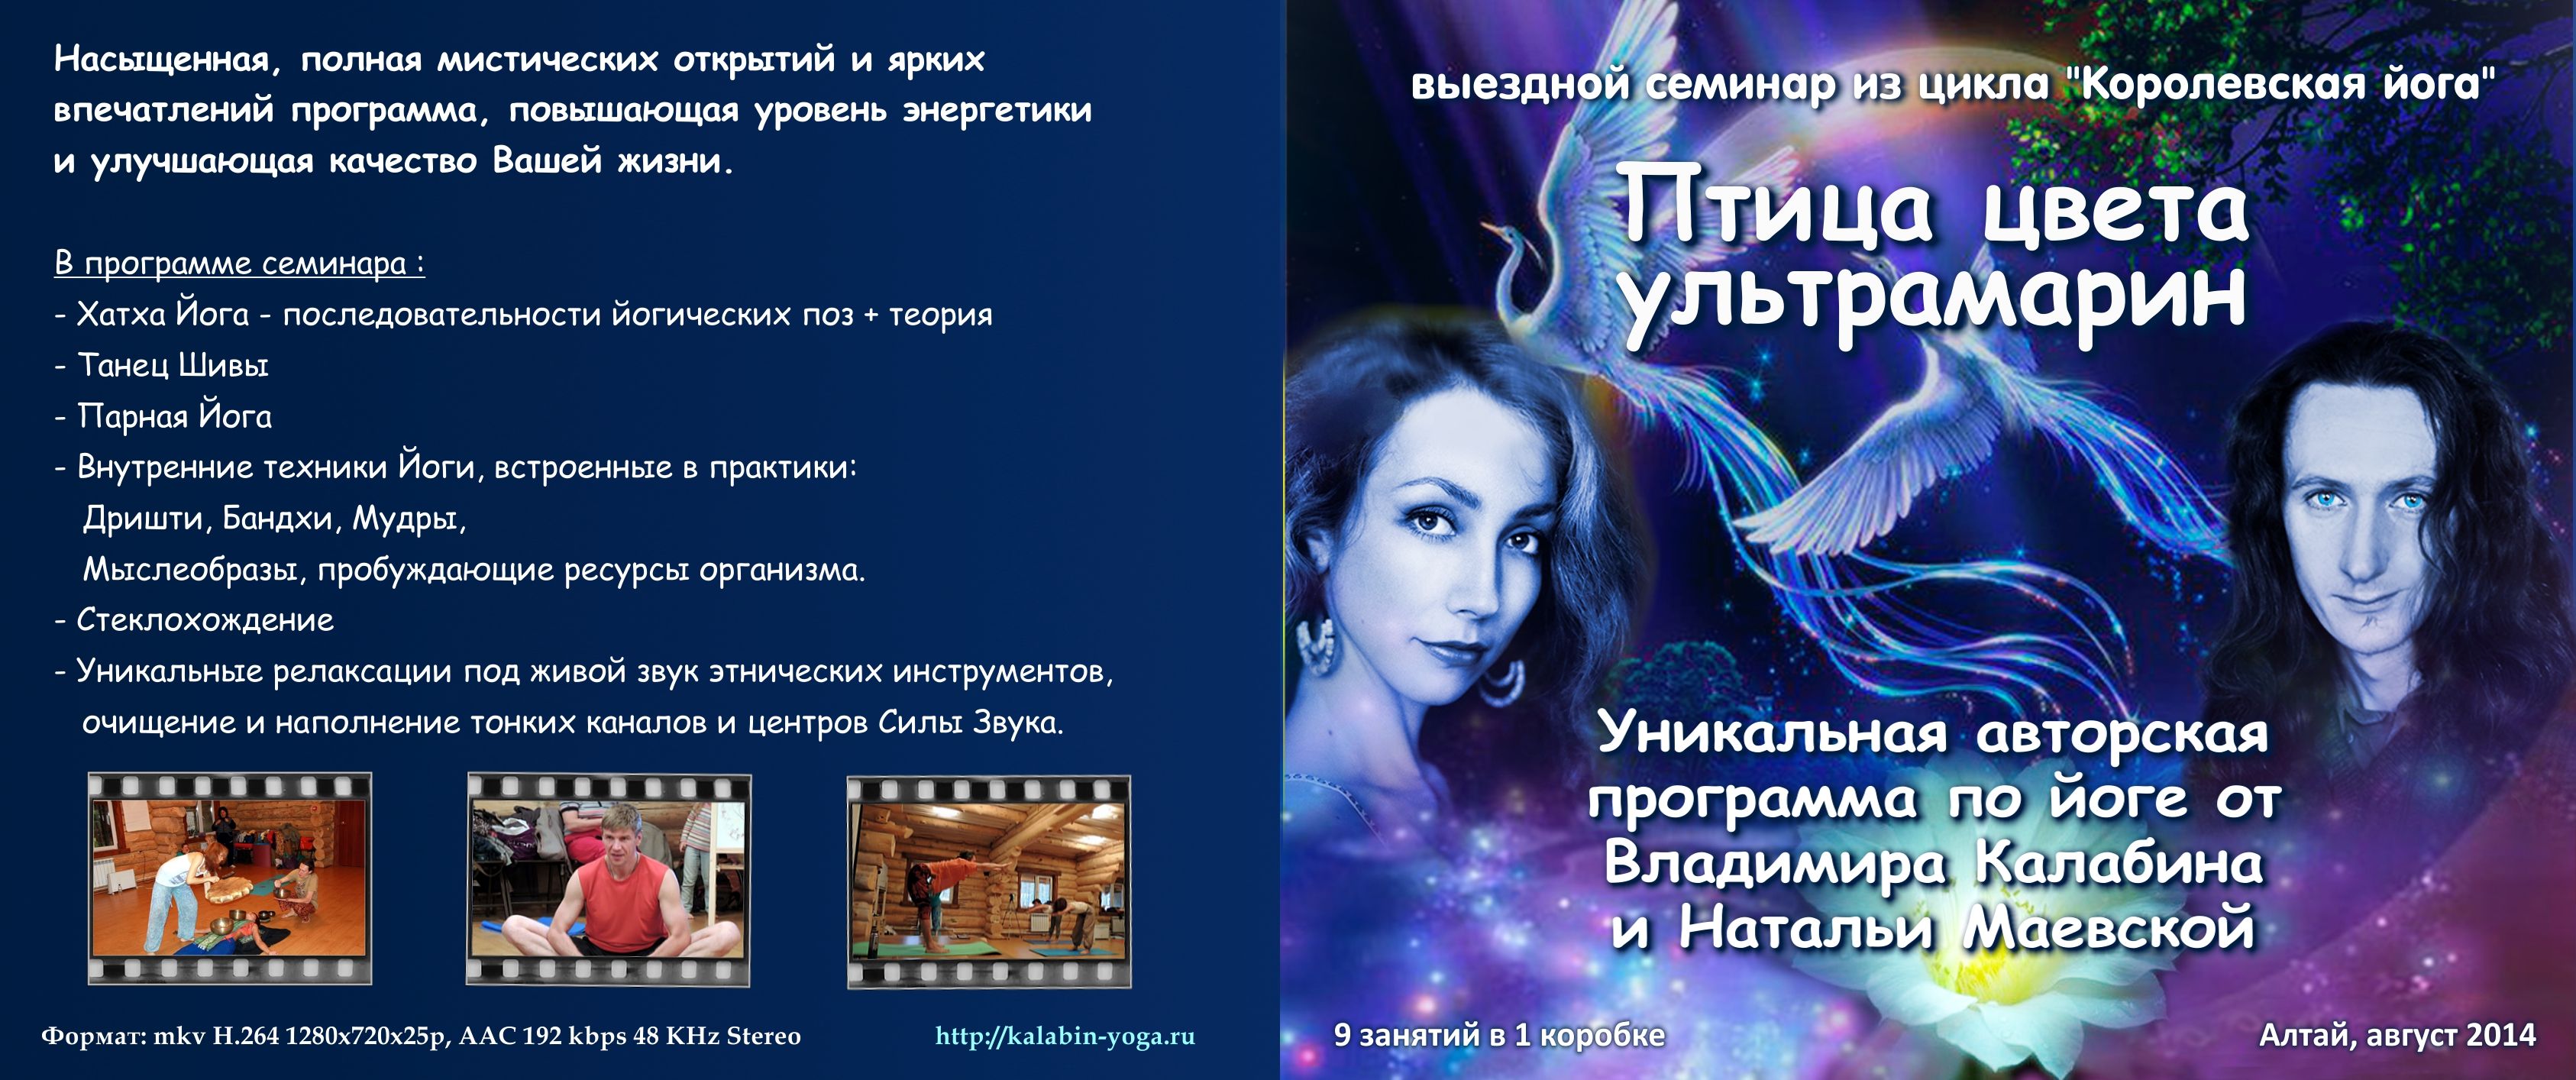 ultramarin-201408-mini-dvd-wide